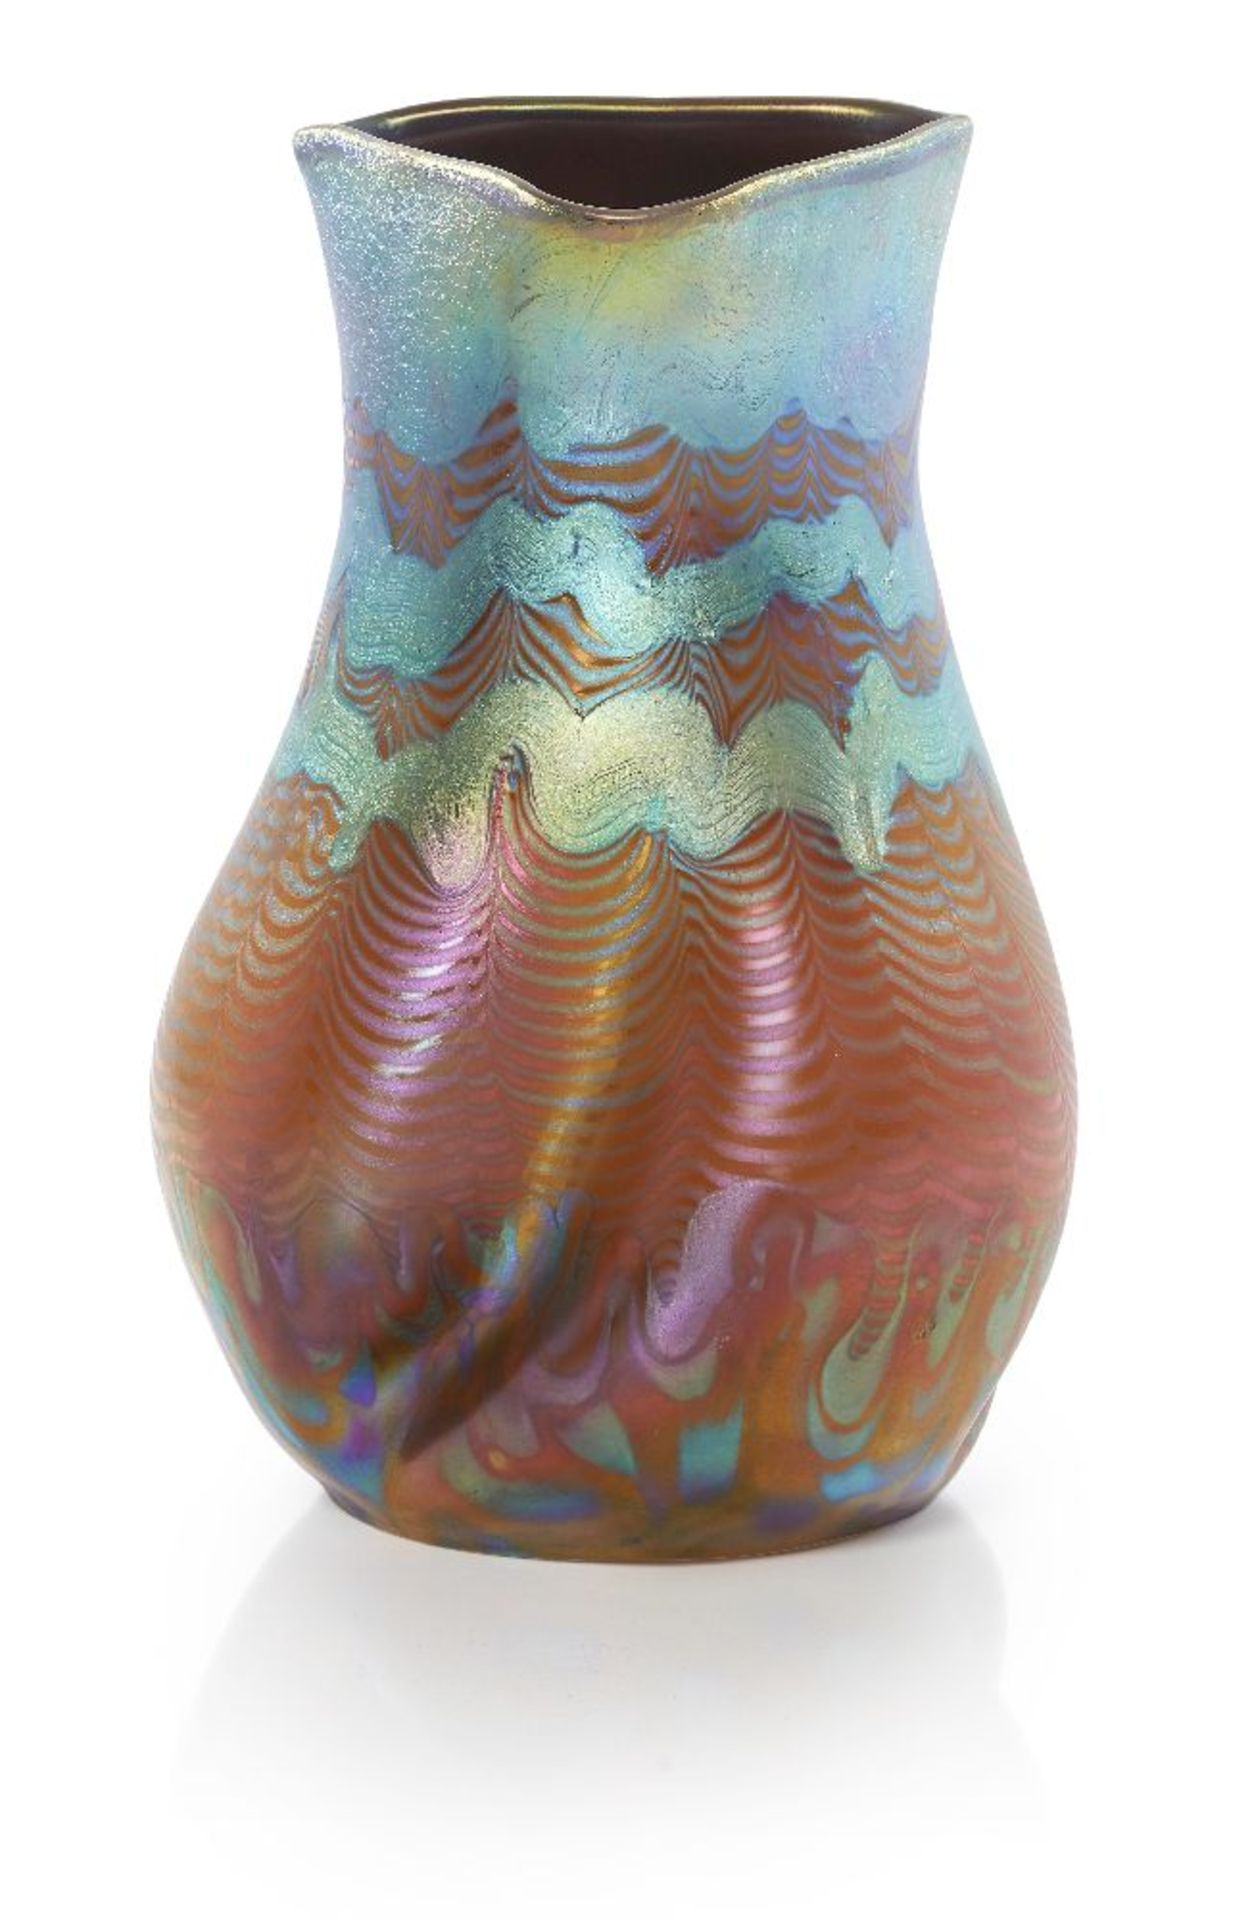 Loetz (Austrian), an iridescent Phaenomen glass vase, c.1902, PG 85/5032, engraved ‘Loetz Austria’